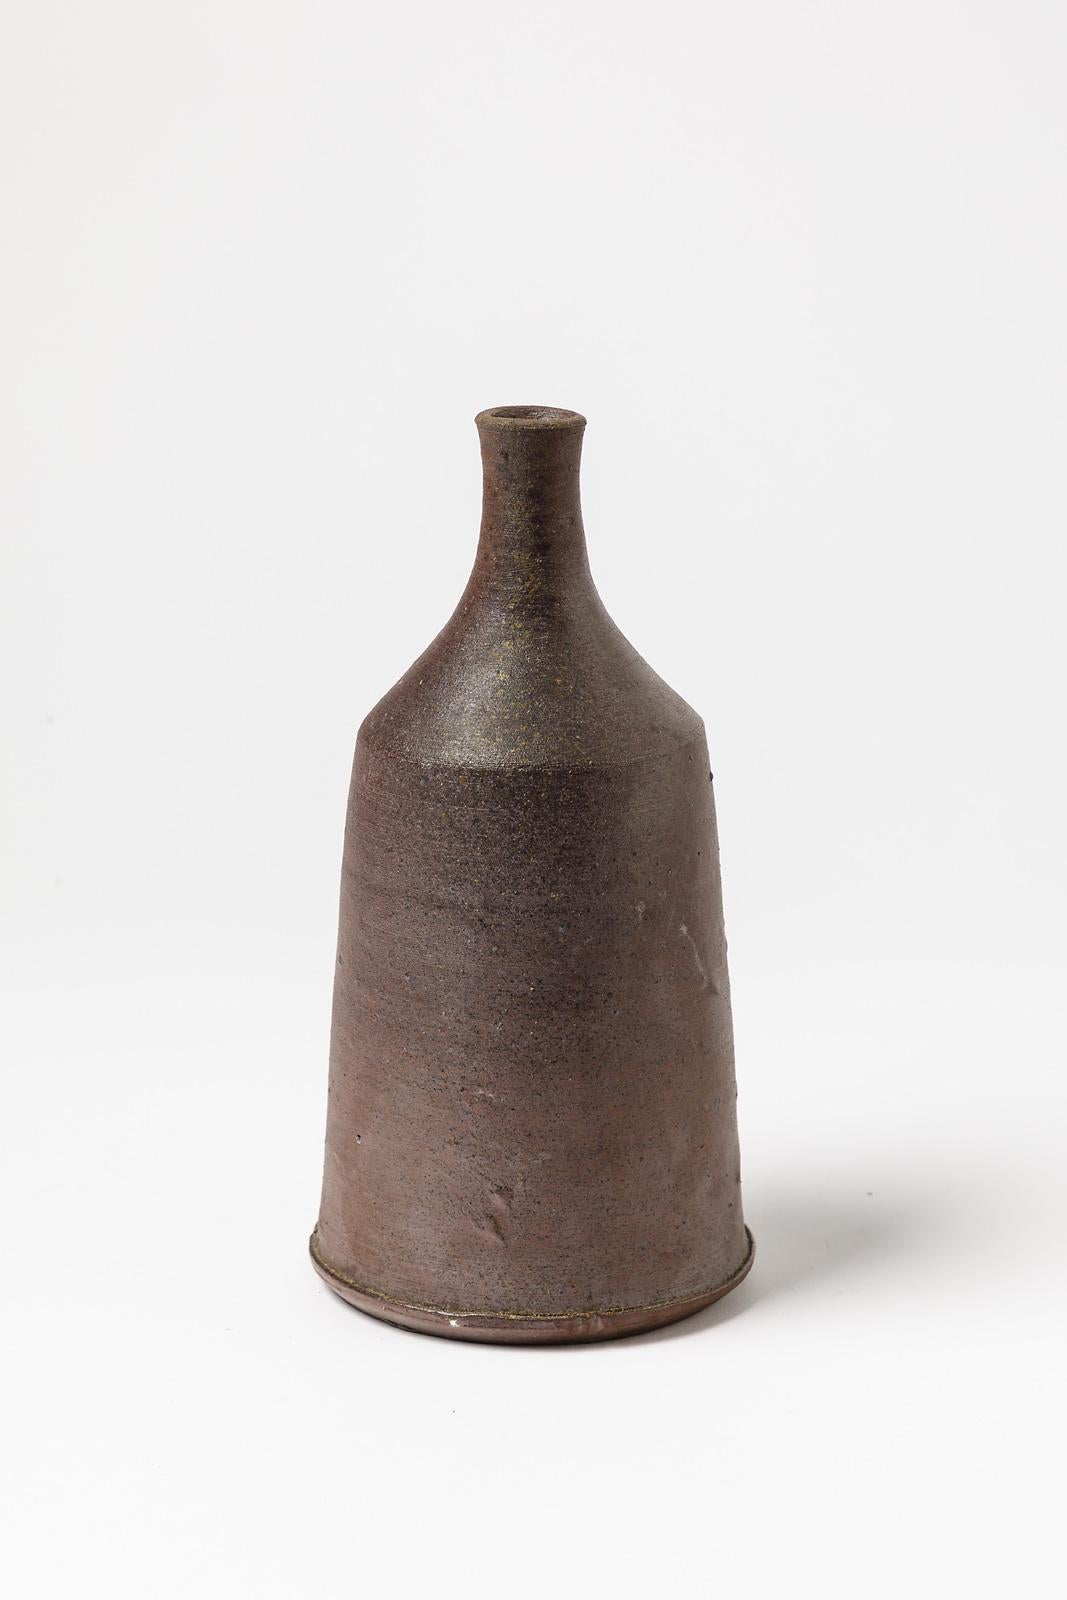 La Borne

Realised in 2007

Stoneware black or brown ceramic bottle or vase

Original good condition

Signed 

Measures: Height 21 cm
Large 9 cm.